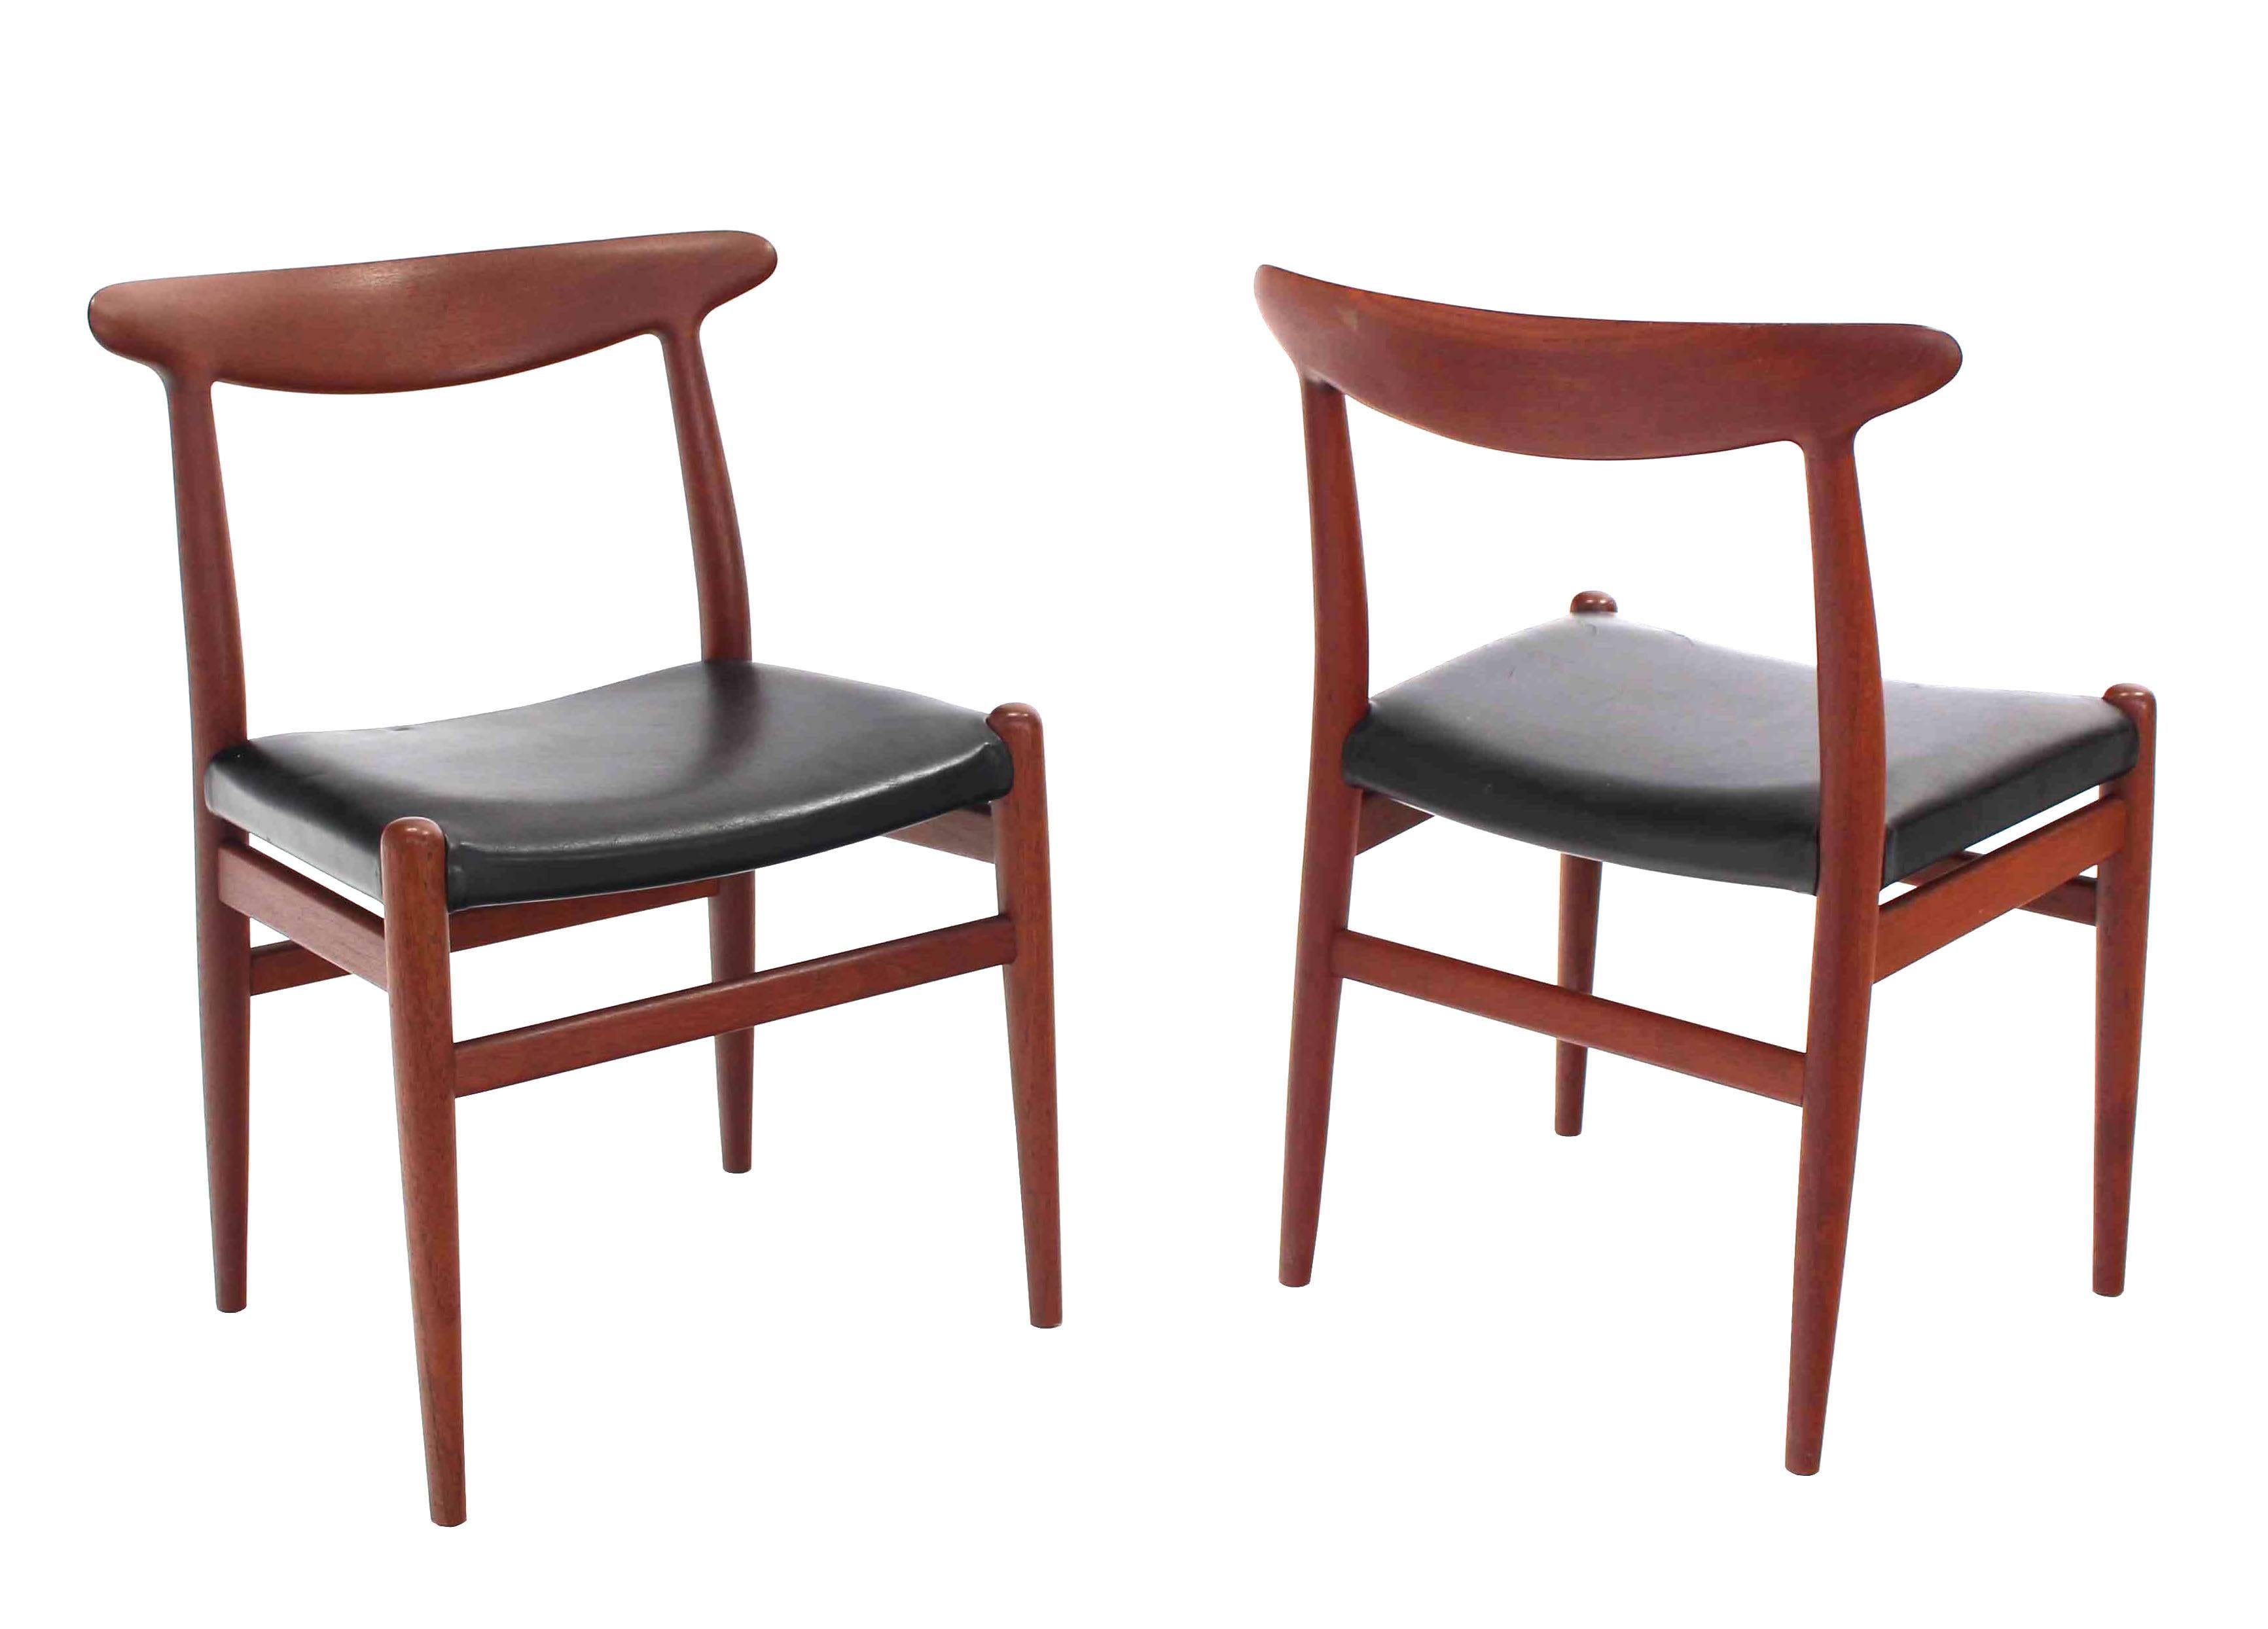 Set of four teak dining chairs by Hans Wegner.